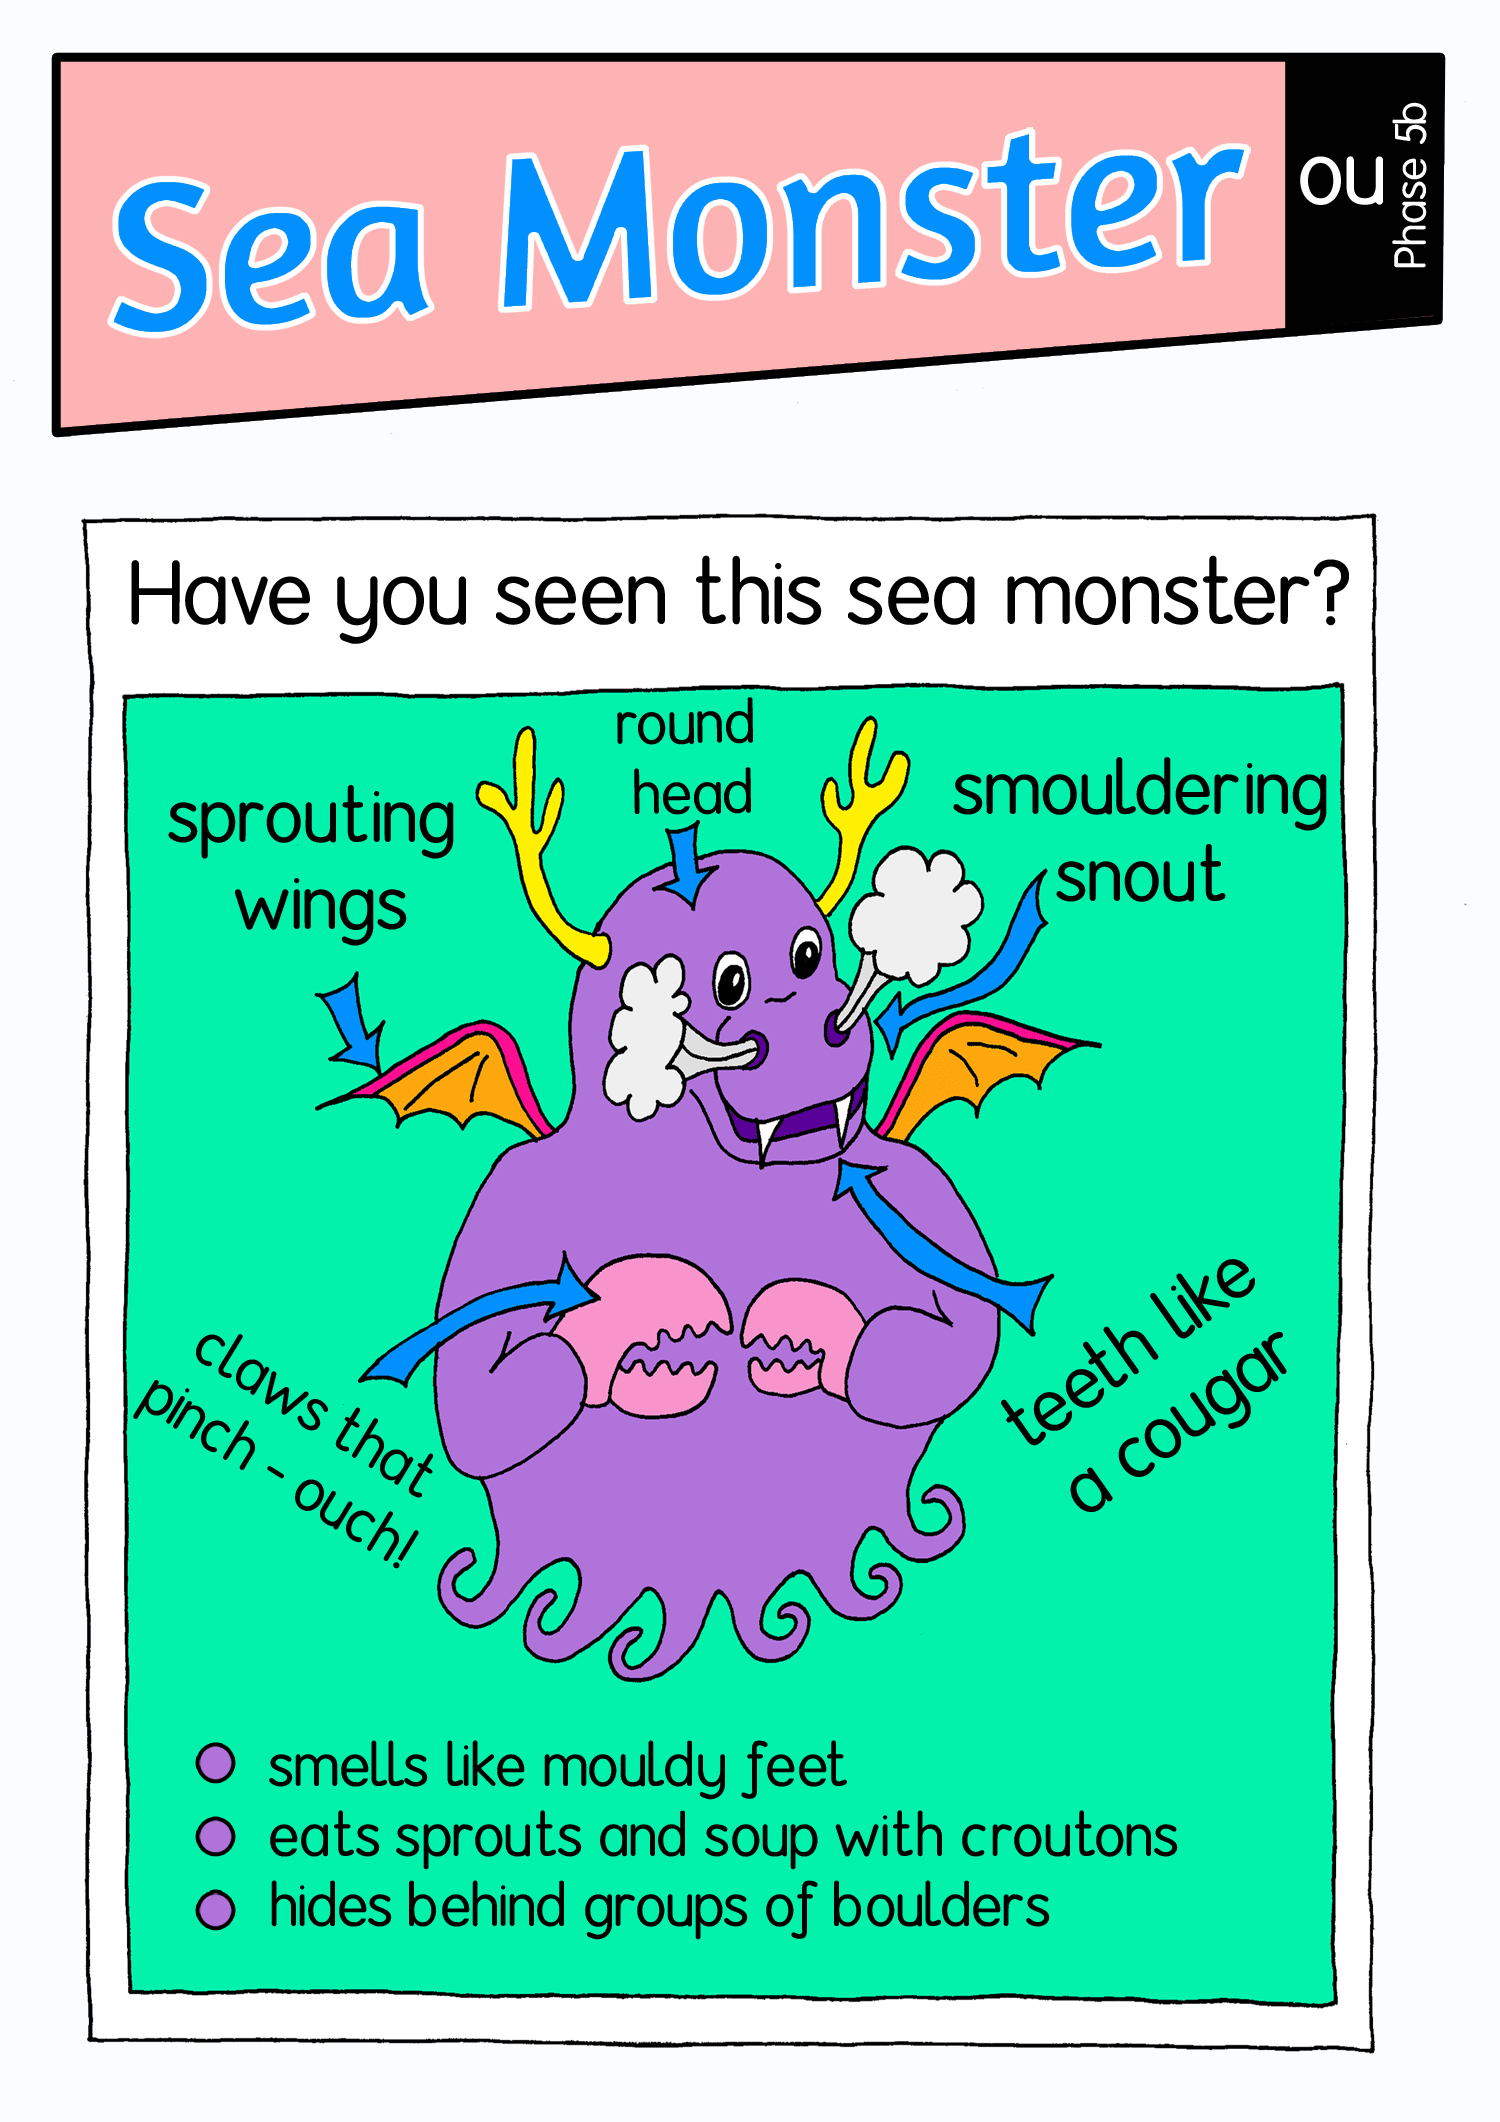 Sea monster panel1